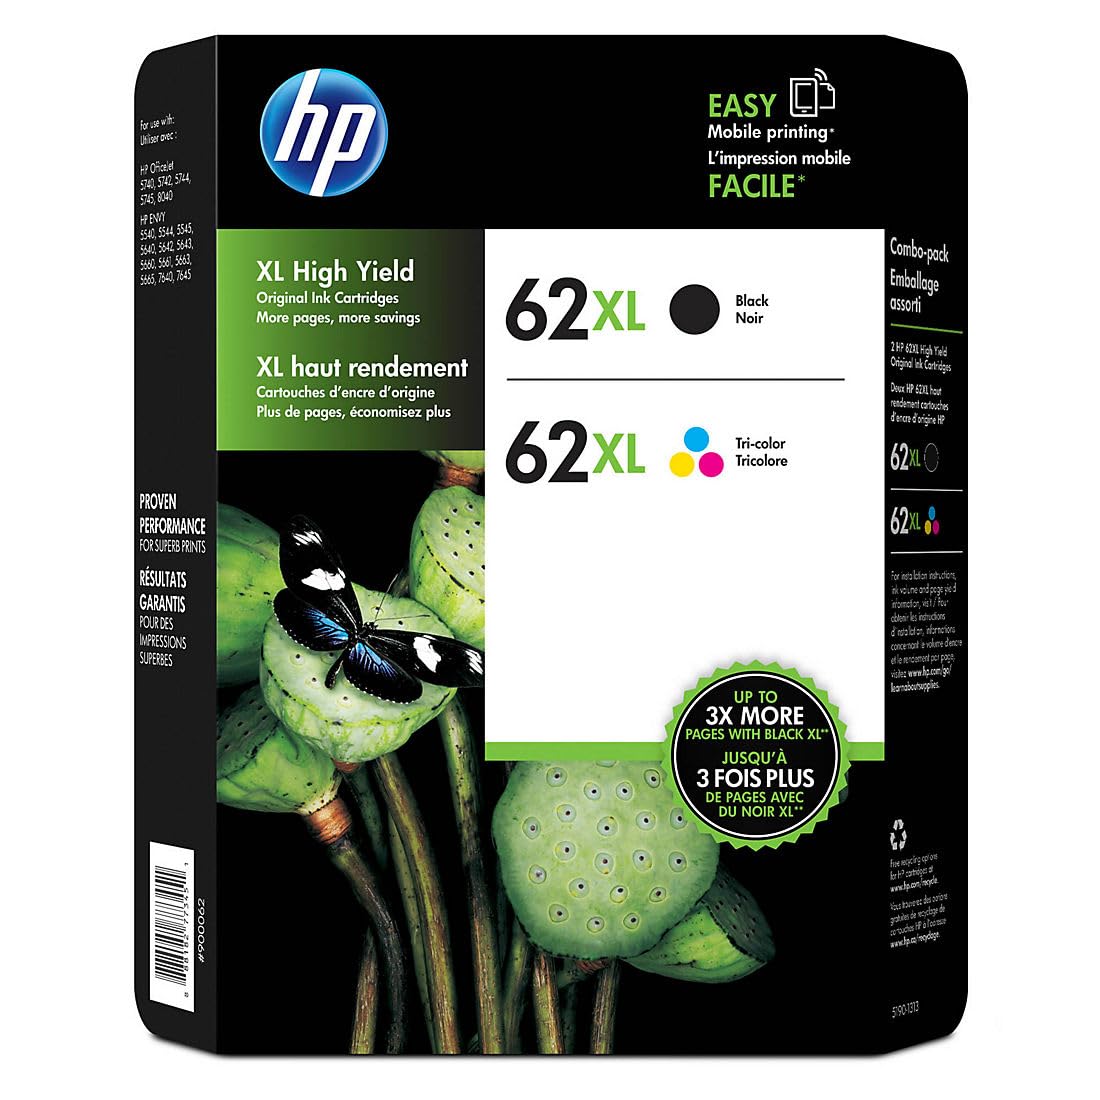 HP 正品 62Xl 高产量黑色和高产量三色 Jetdirect 打印墨盒...